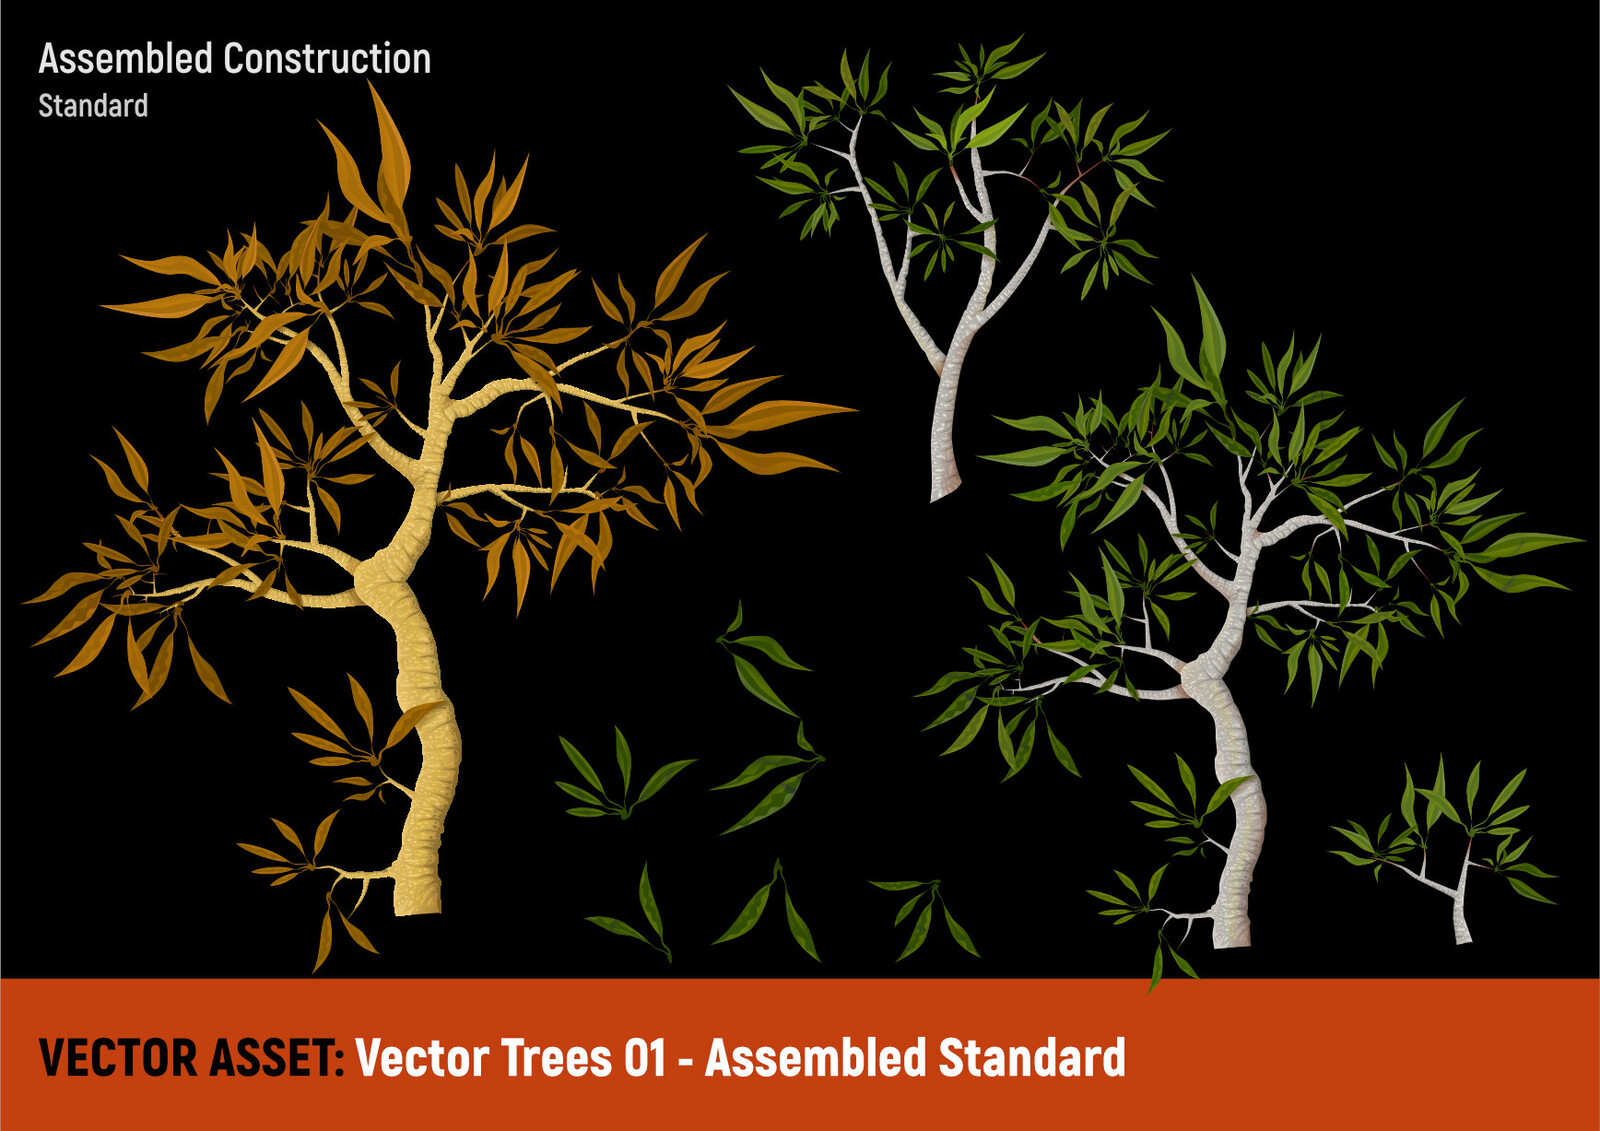 Tree Builder 01: Standard Assembly